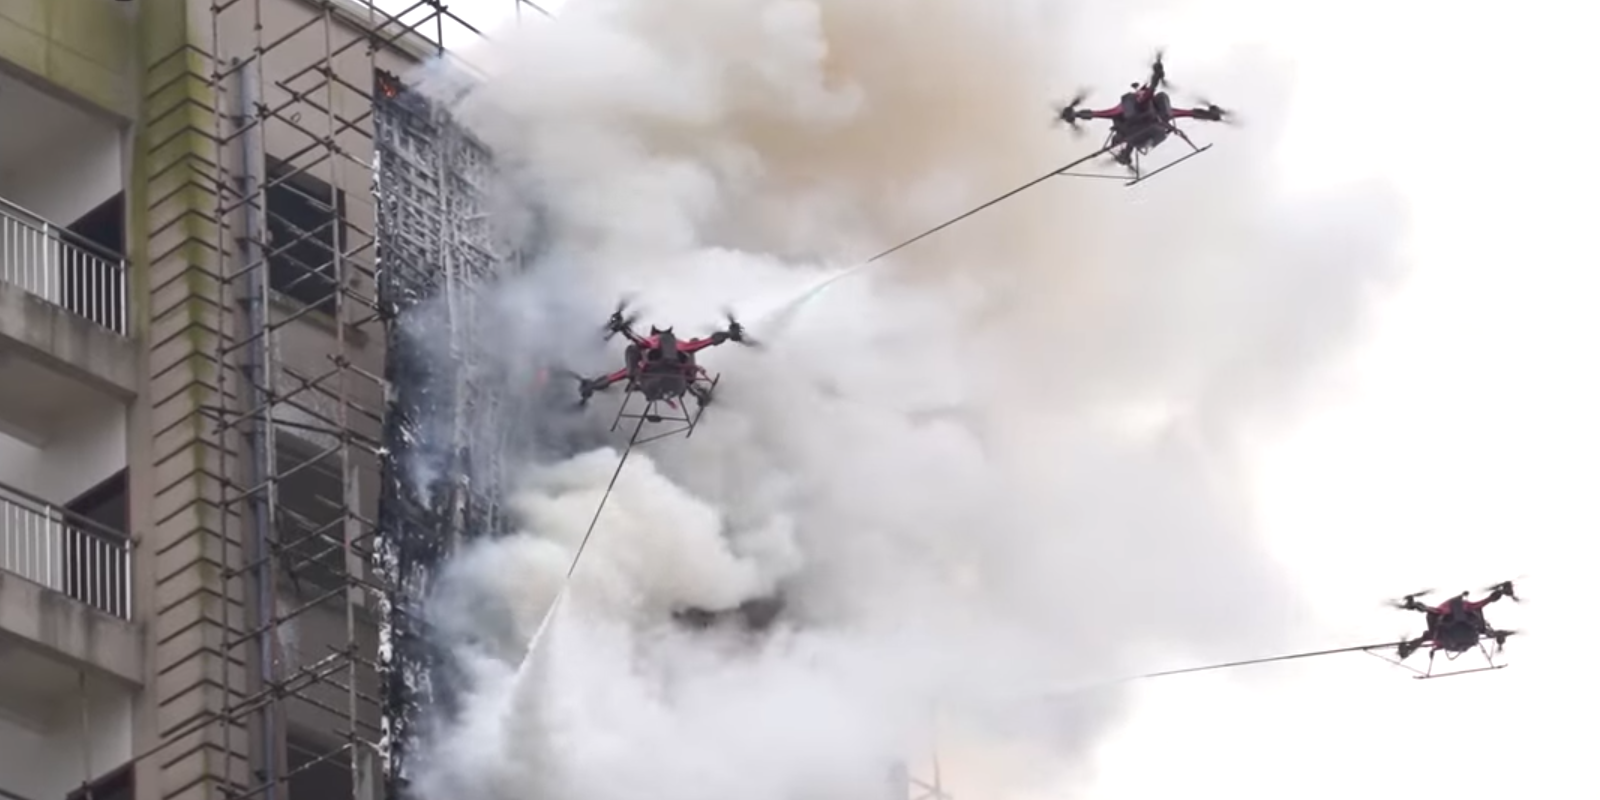 Firefighting drones extinguish 10-story blaze in China - DroneDJ